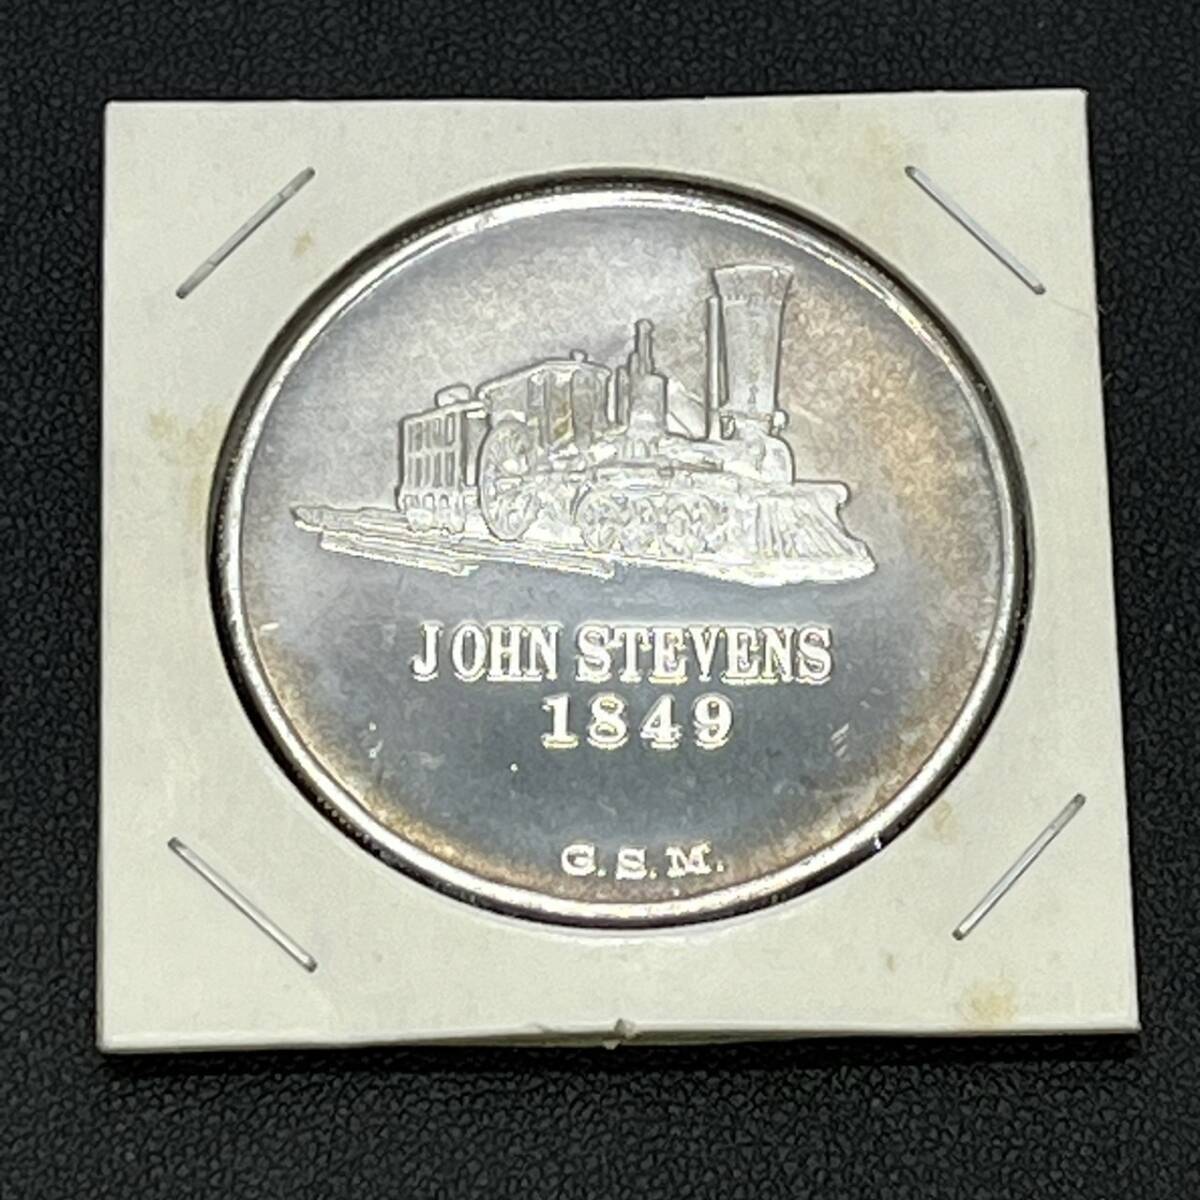 【DHS3180AT】THE INTERNATIONAL 銀貨 1849 JOHN STEVENS 999 FINE SILVER シルバー 当時物 コレクション コイン_画像5